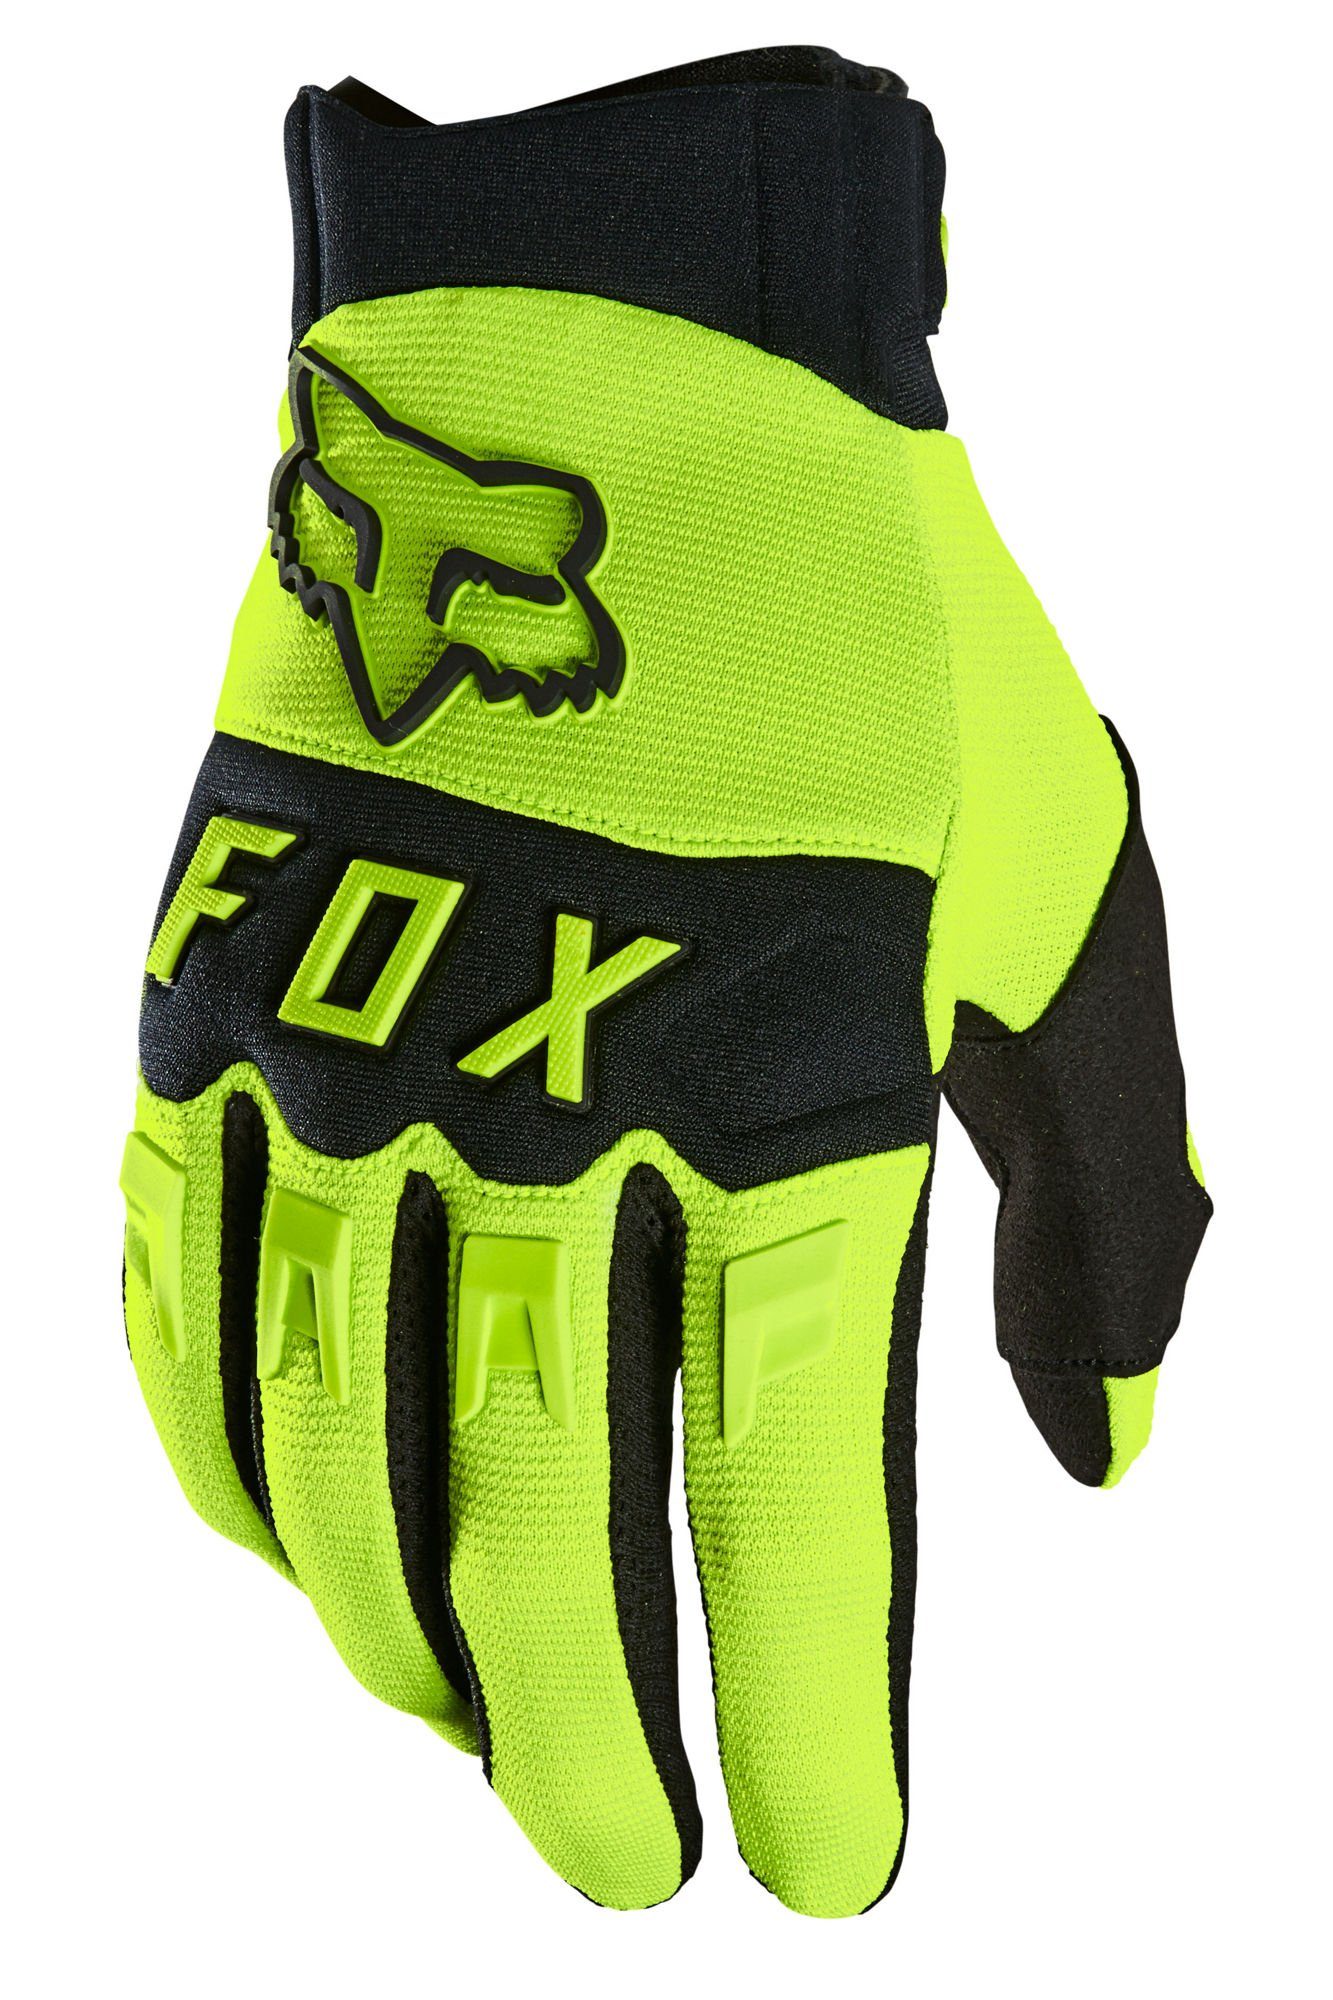 Handschuhe Fox gelb neon Racing XXL Dirtpaw Fox Glove Motorradhandschuhe